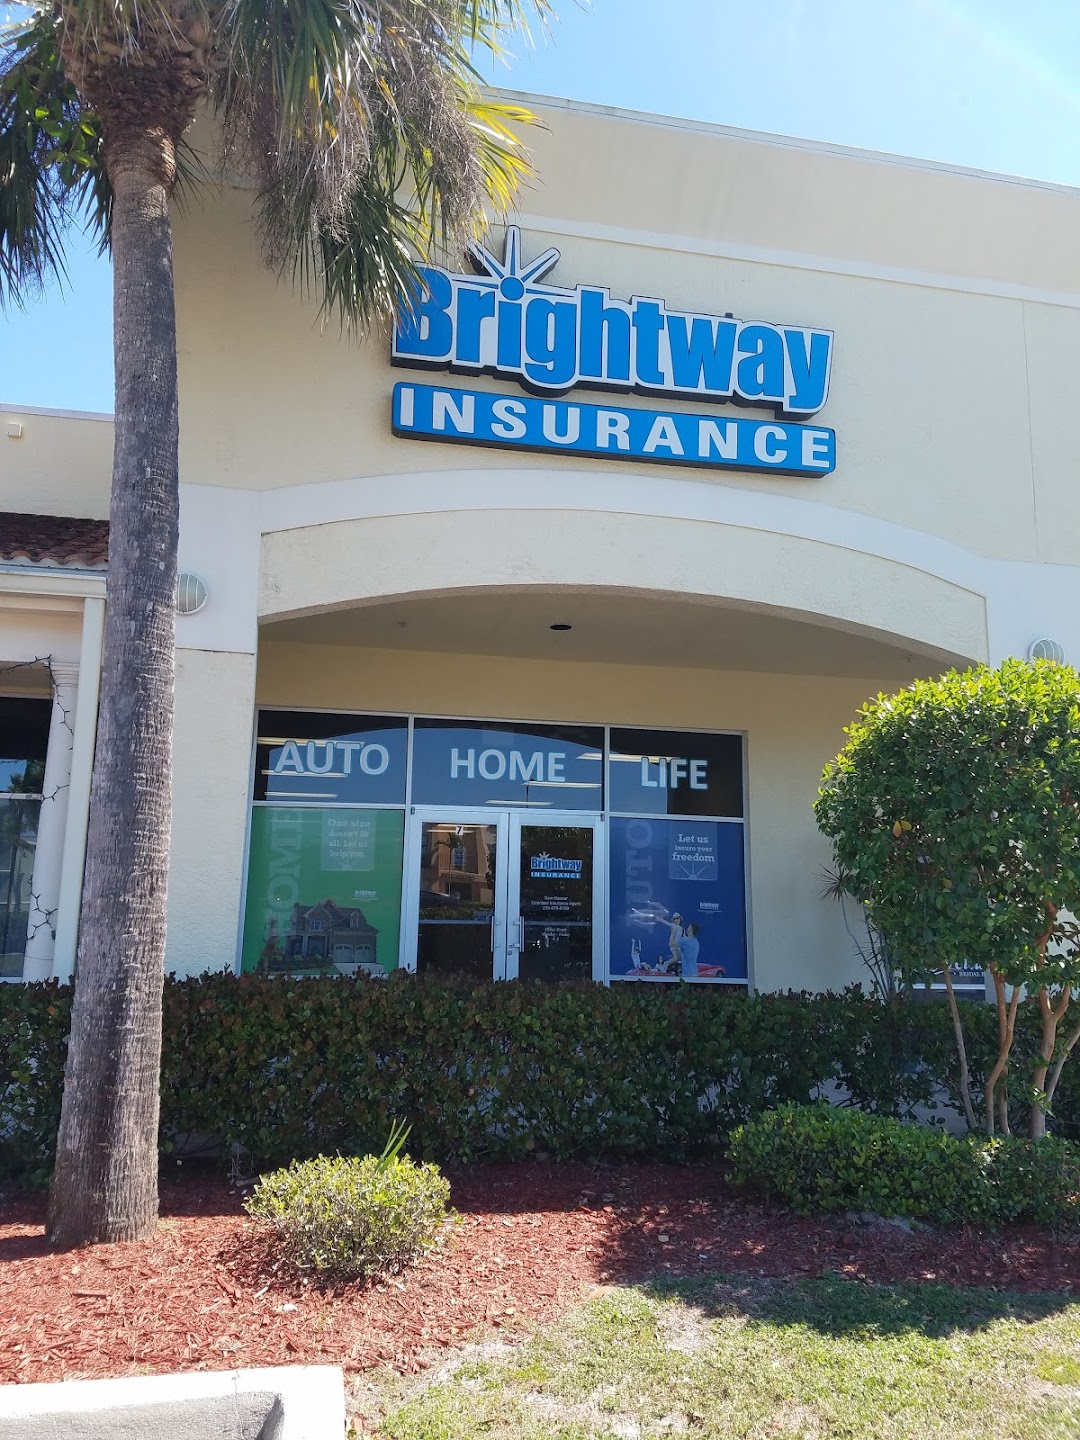 Brightway Insurance, Bonita Springs